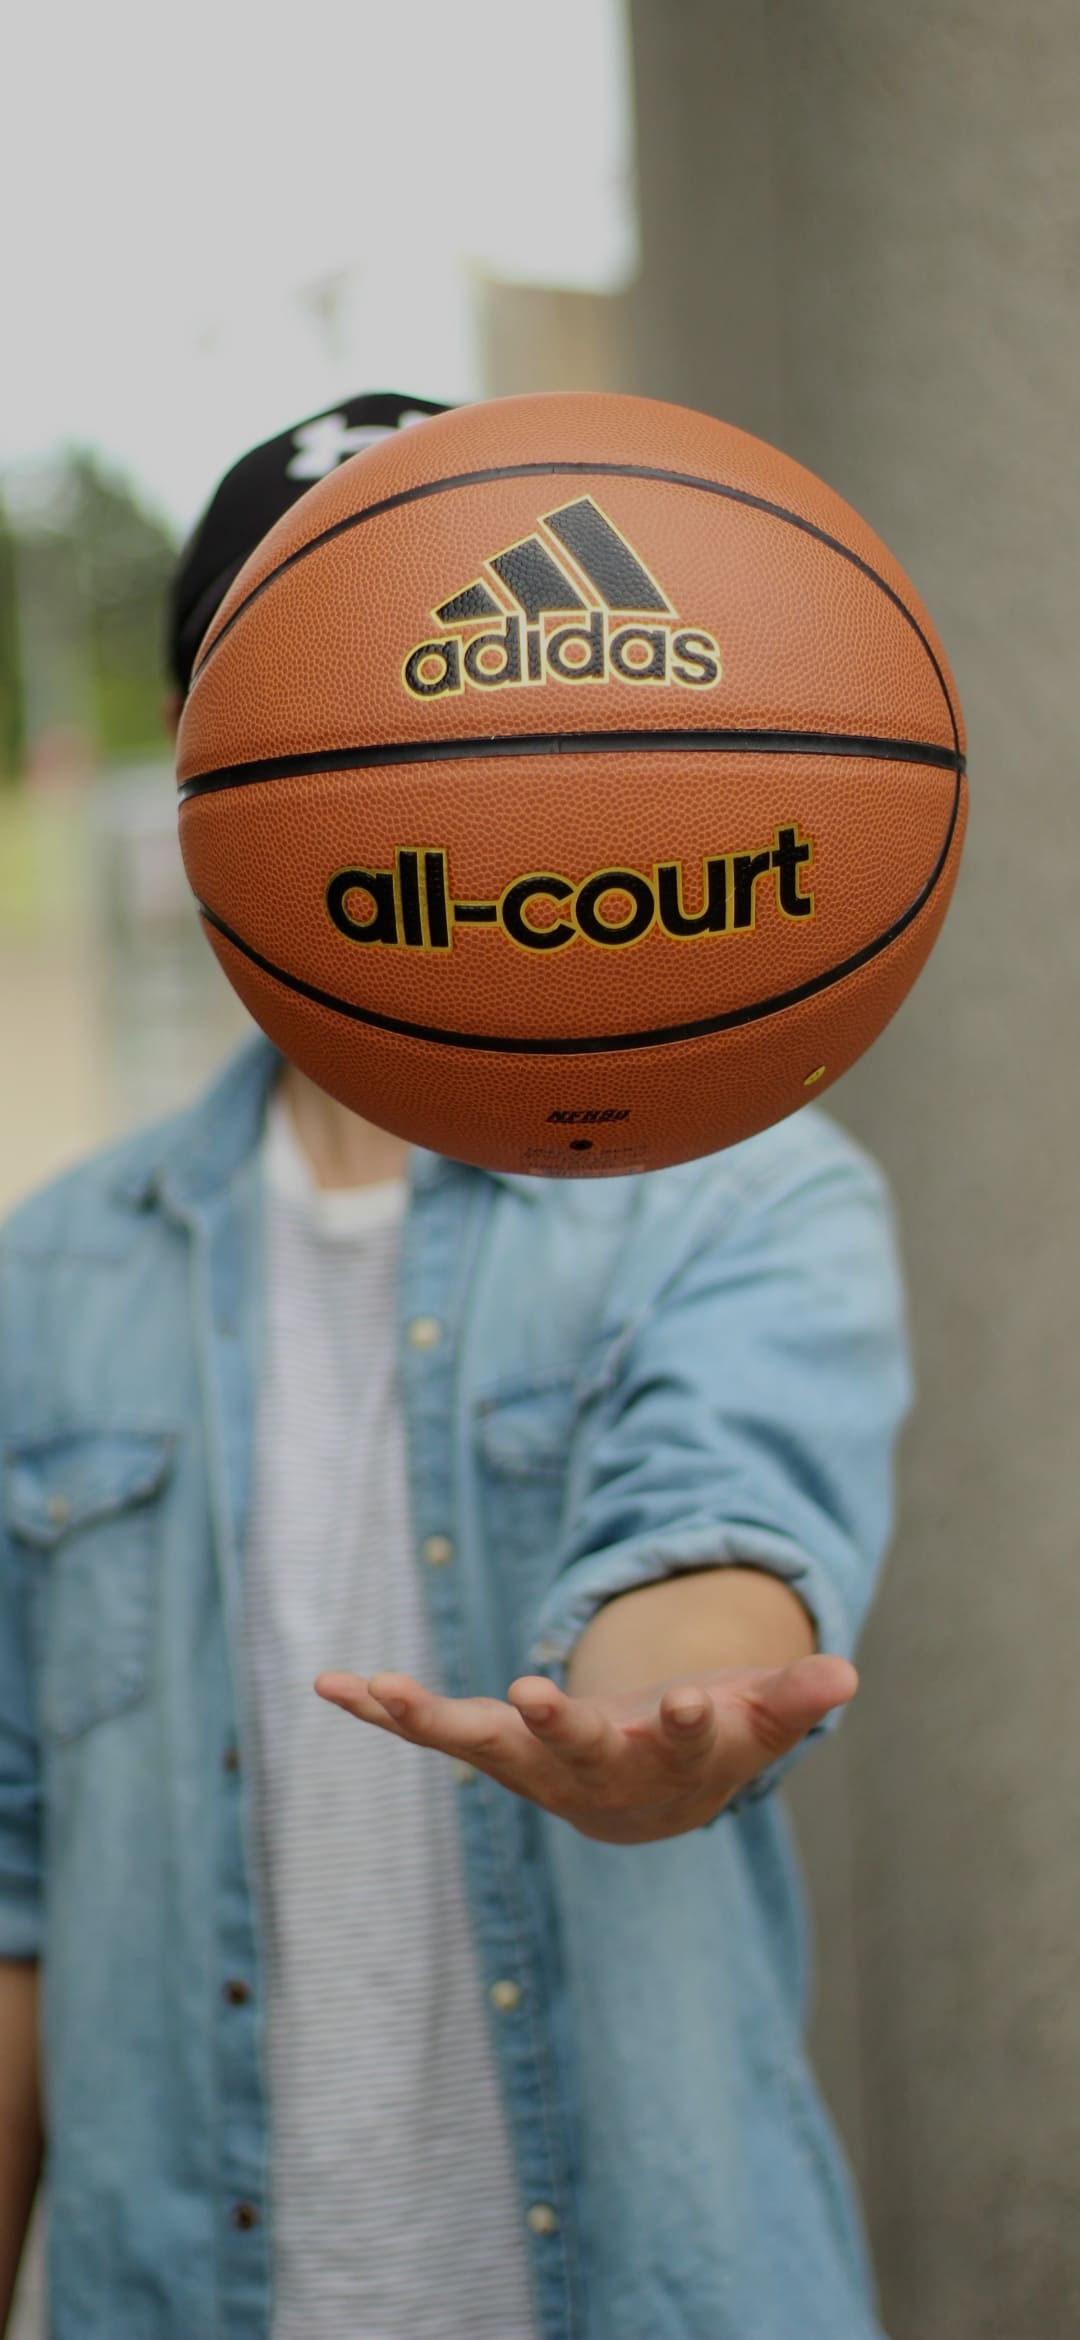 Adidas Wallpaper Basketball